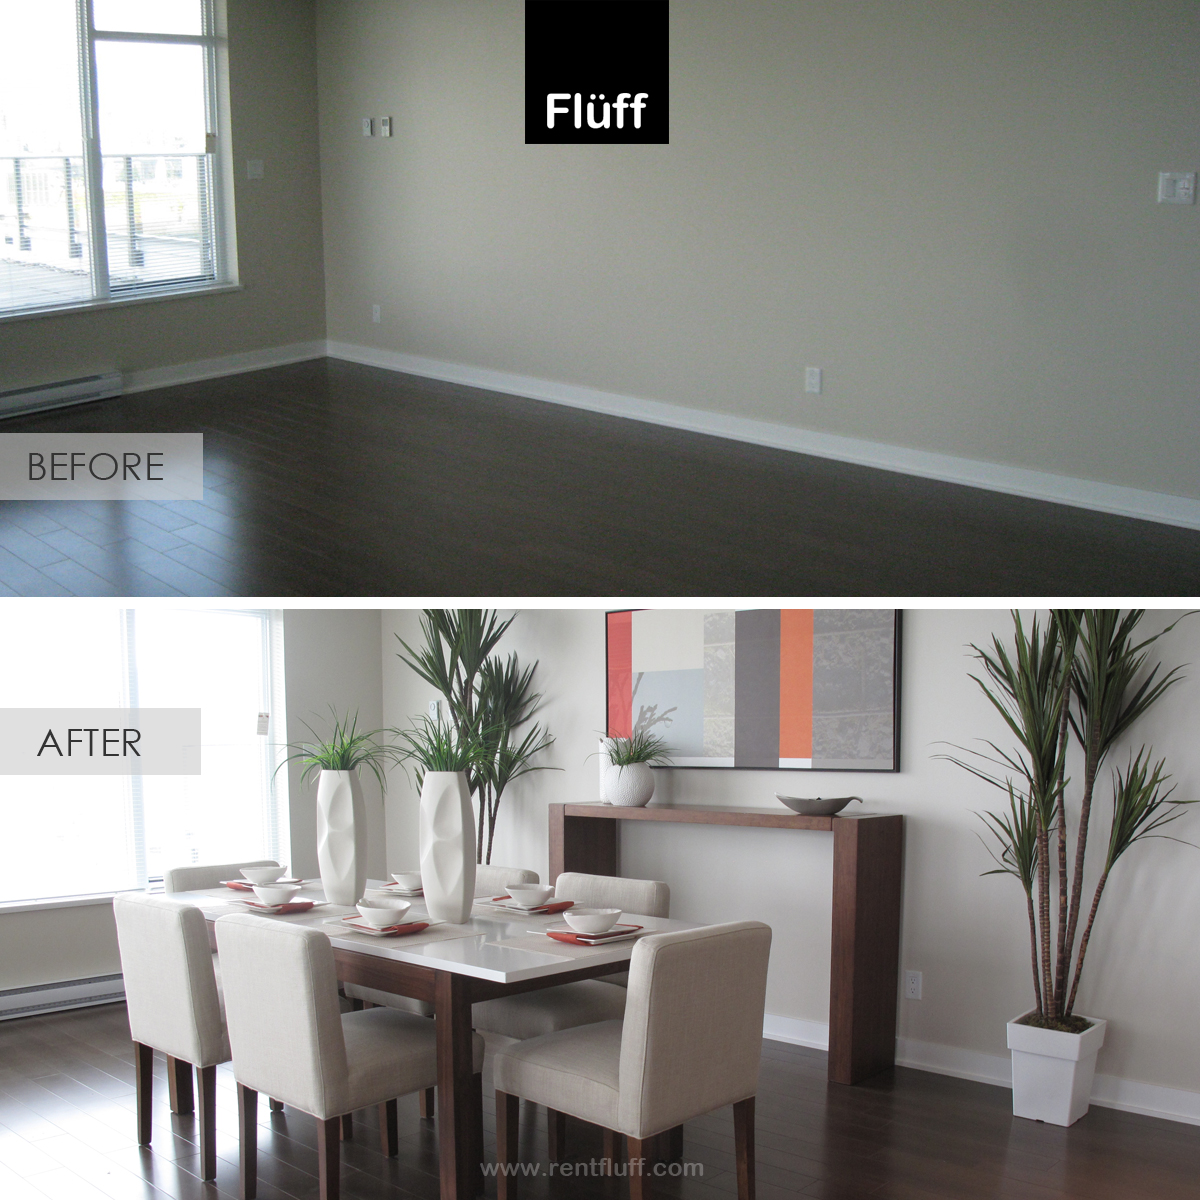 Before and After - Fluff Designs - www.rentfluff.com